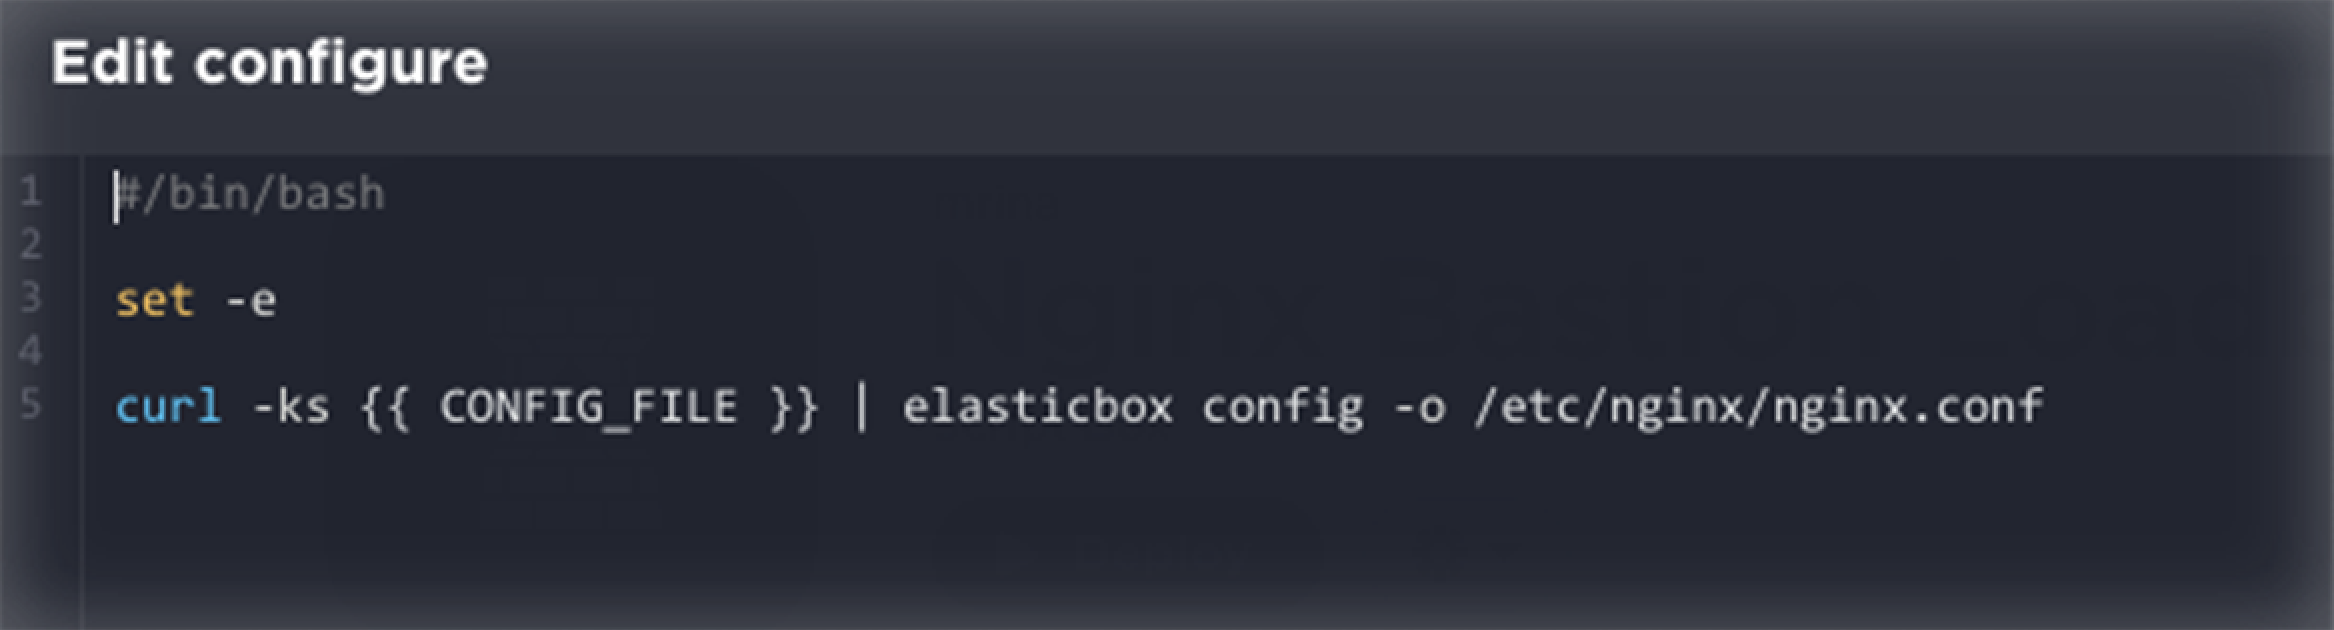 Editing configure binding script in box Node